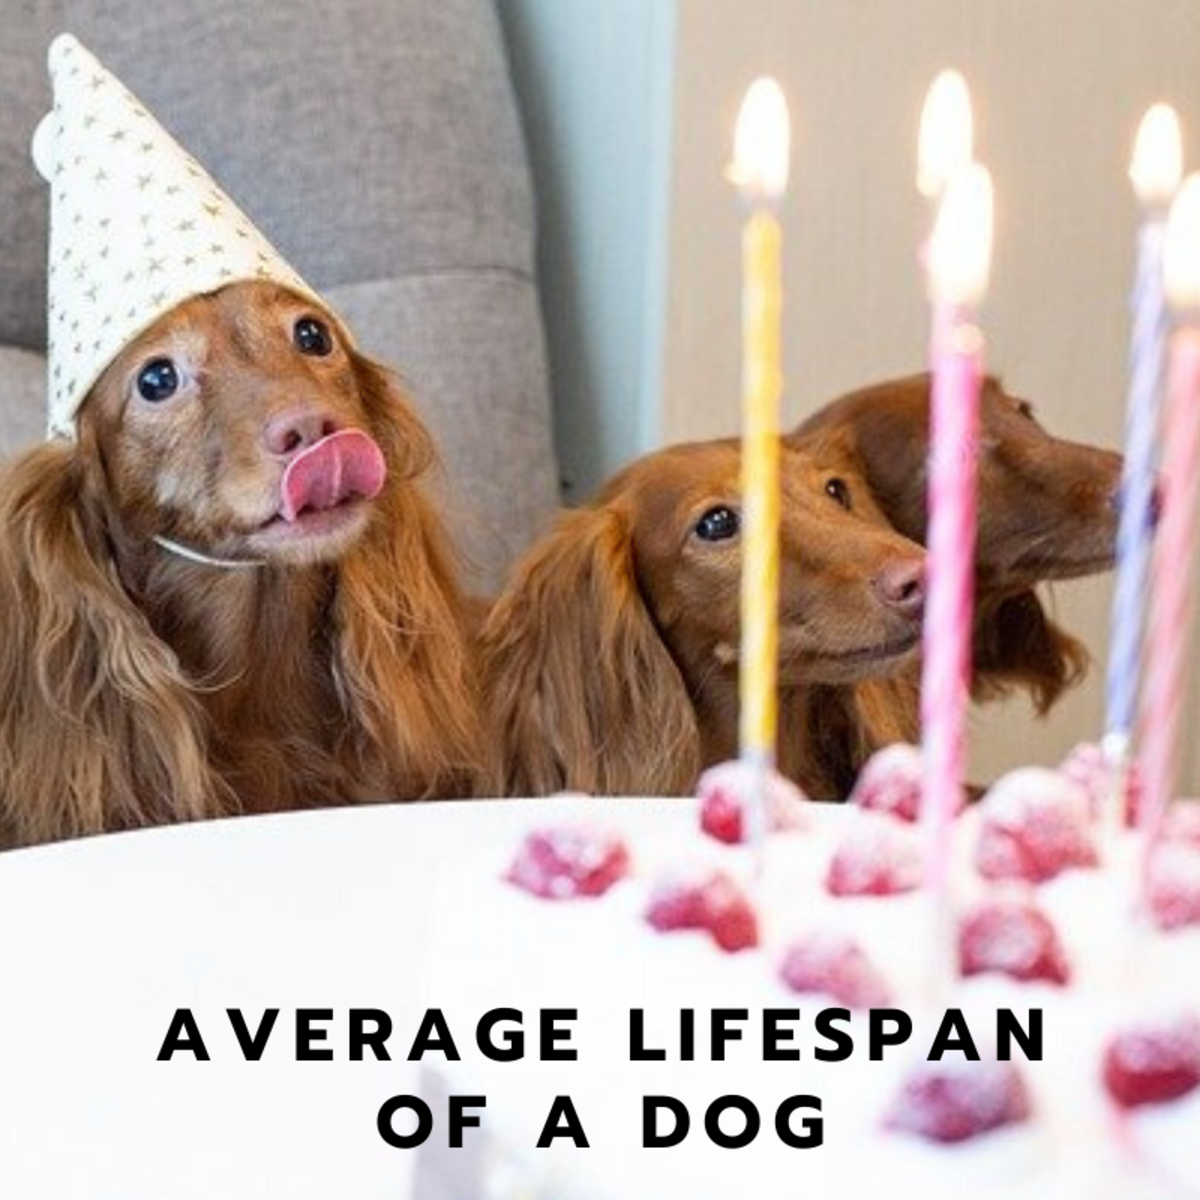 Celebrating a doggie birthday!